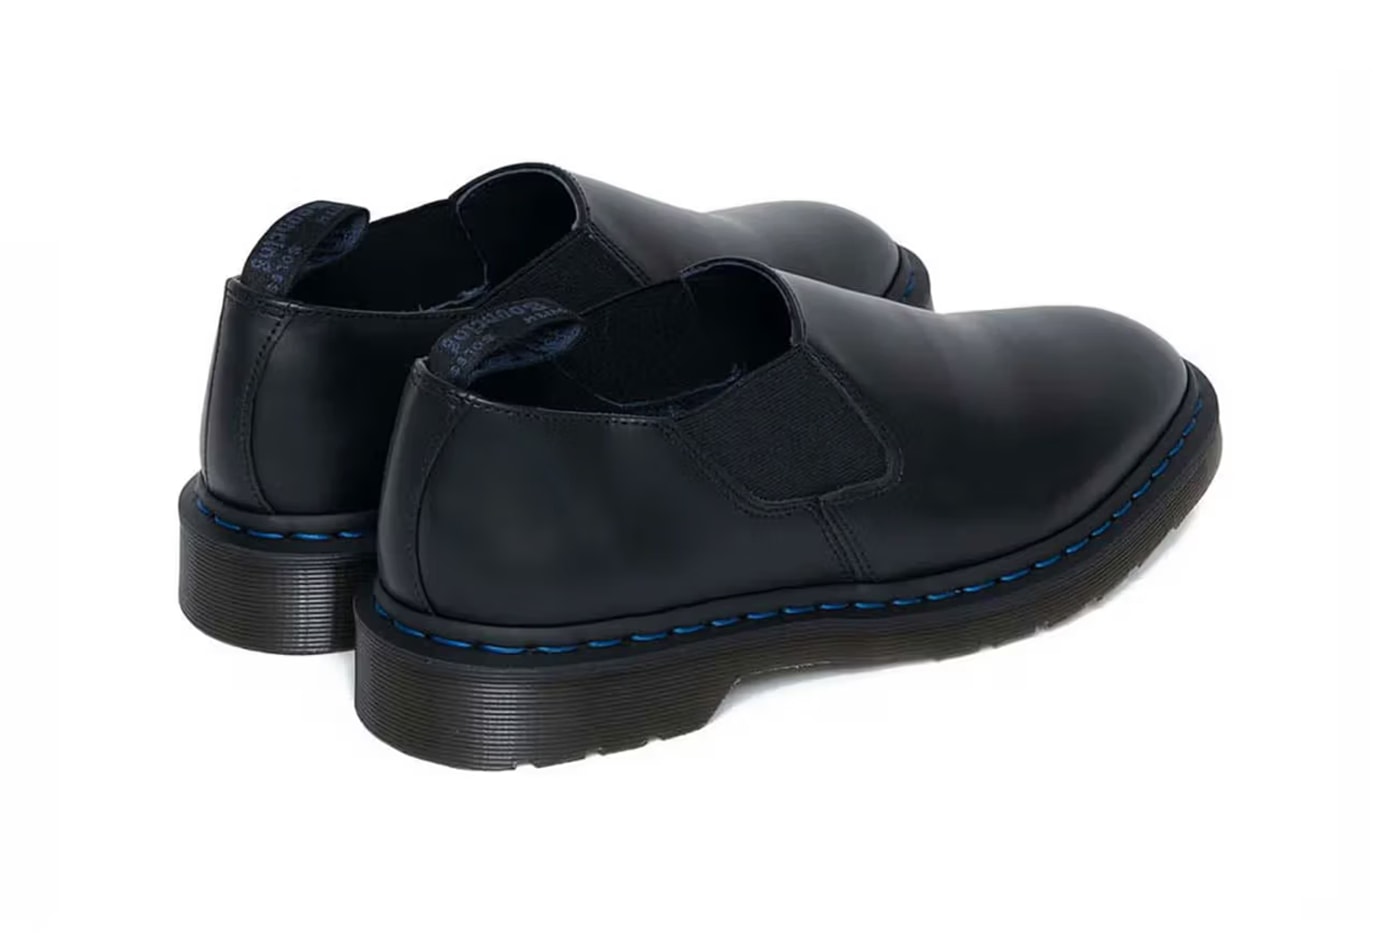 nanamica x Dr. Martens Footwear Collab